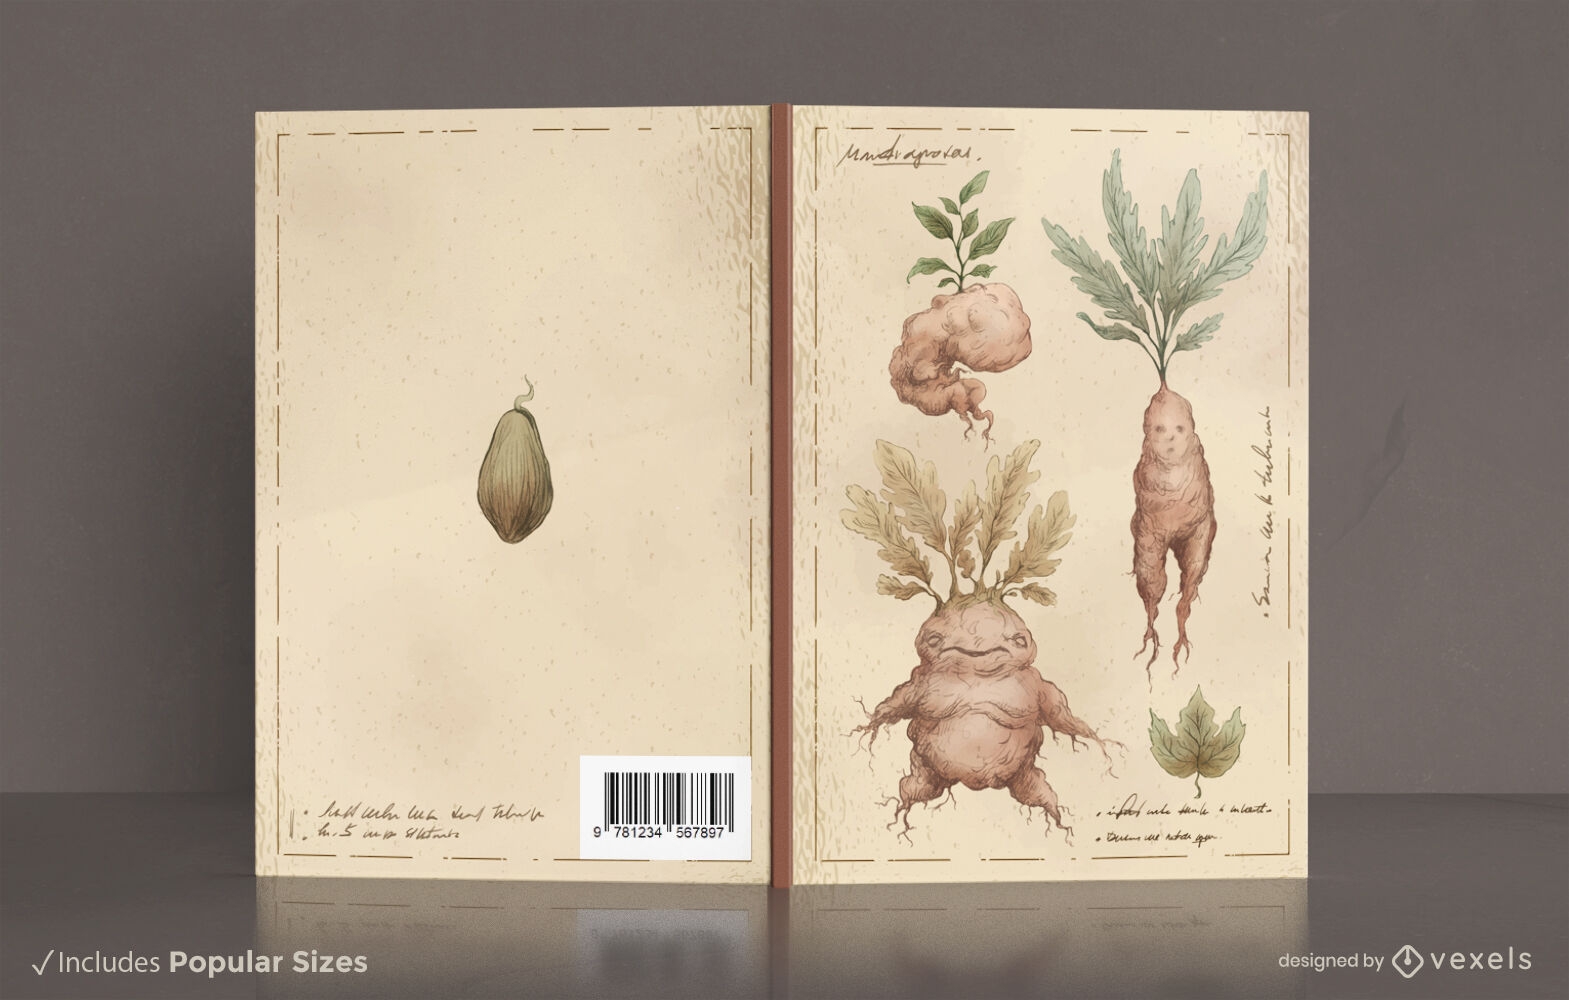 Mandrake plant nature book cover design